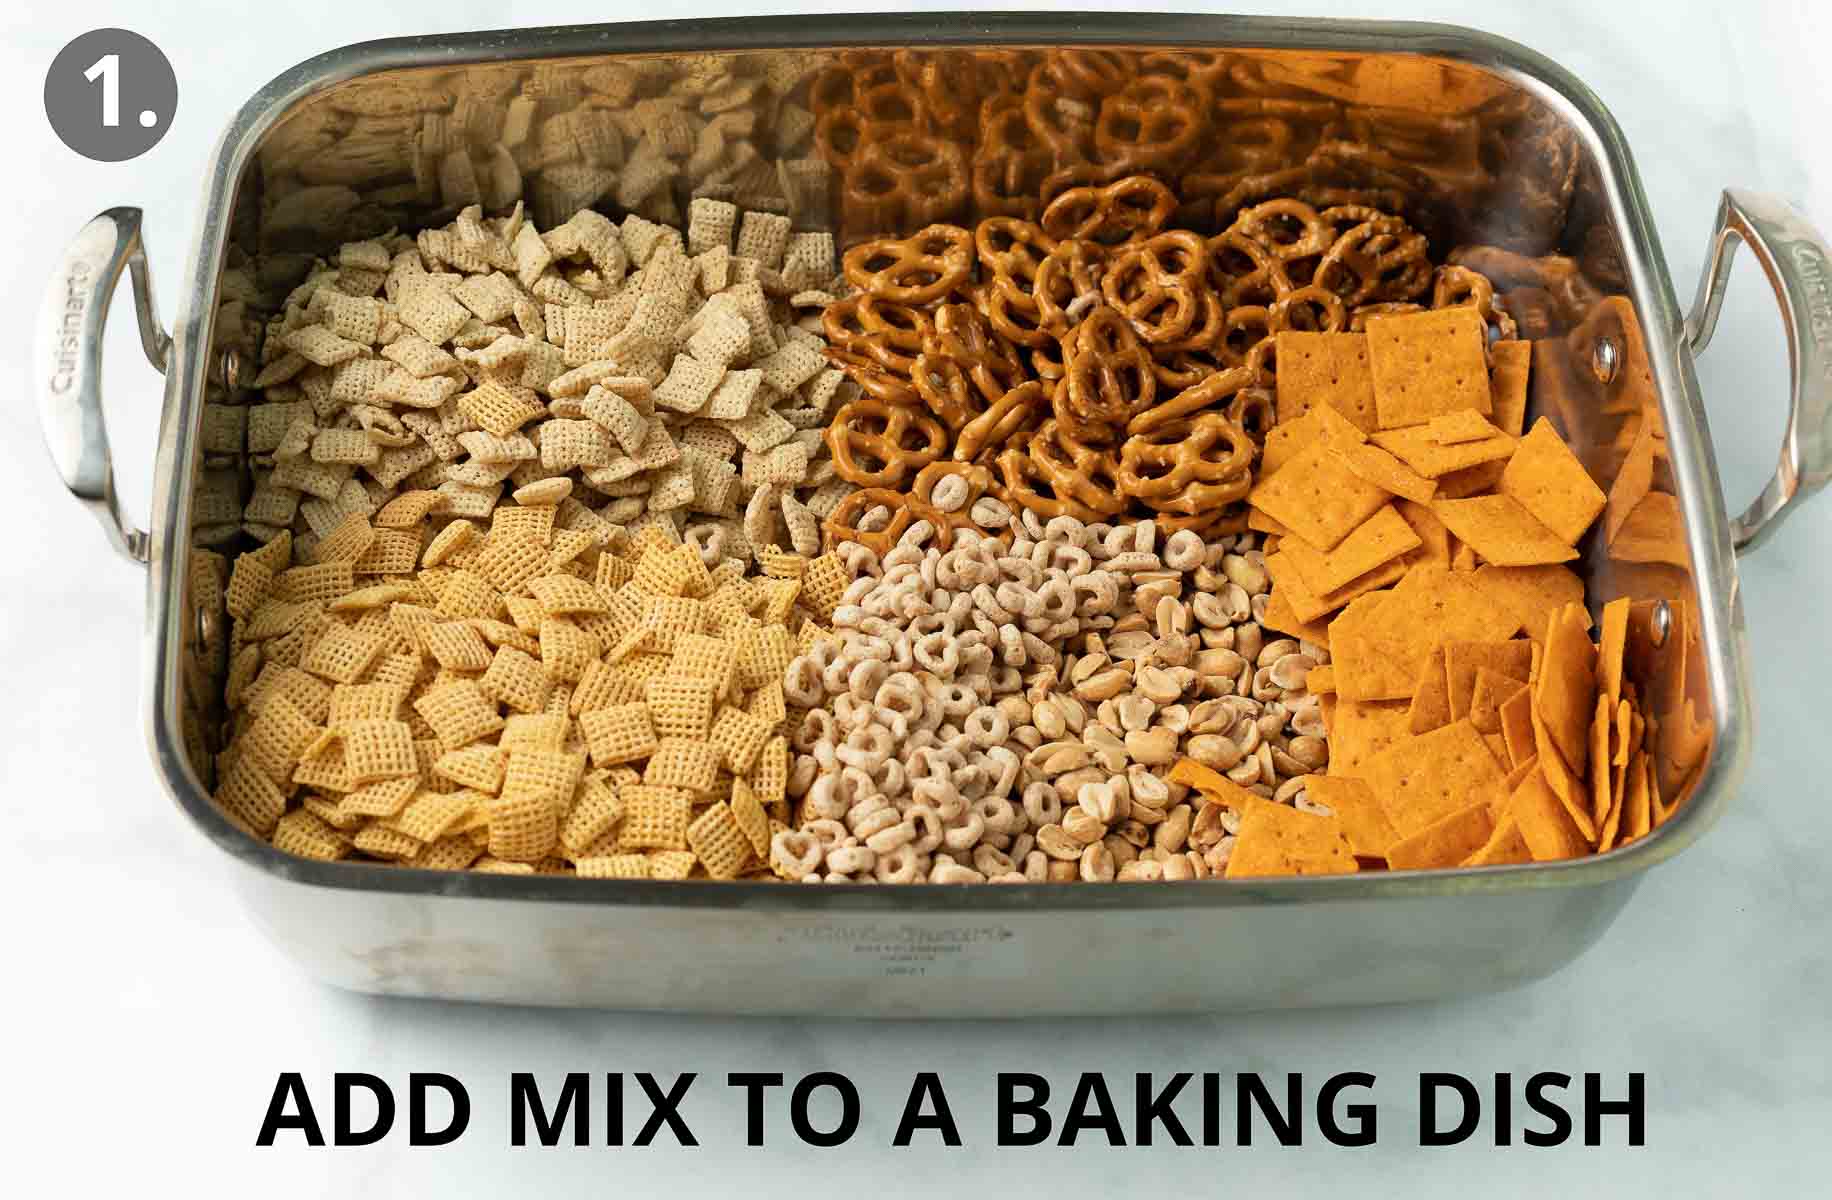 Add mix to a baking dish